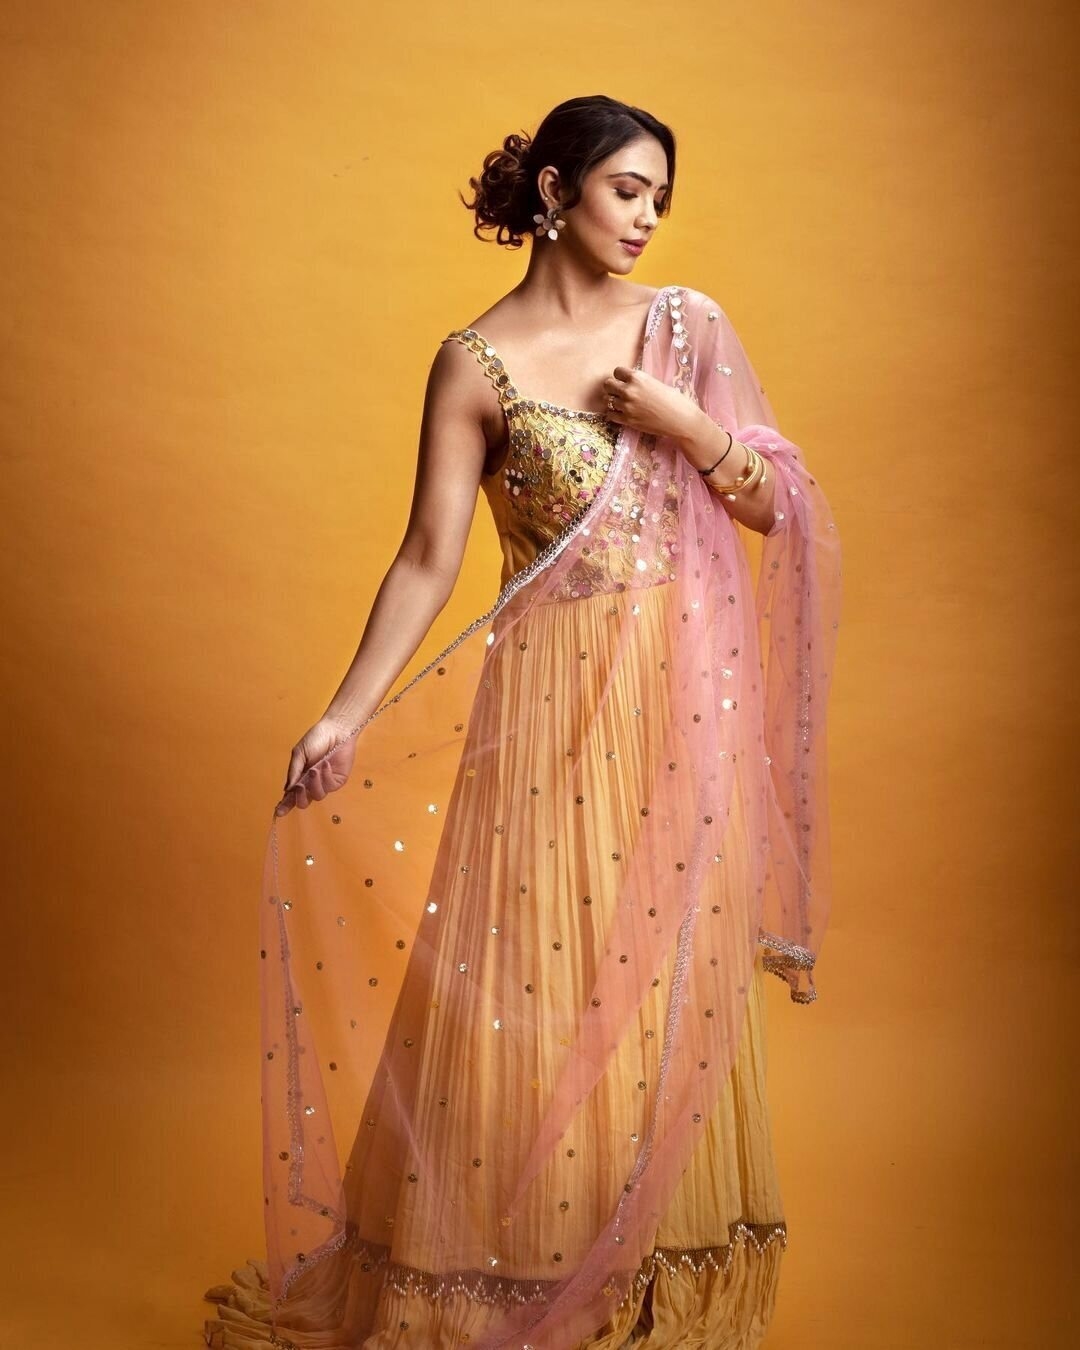 Pooja Banerjee Amazing New Images In Shoot